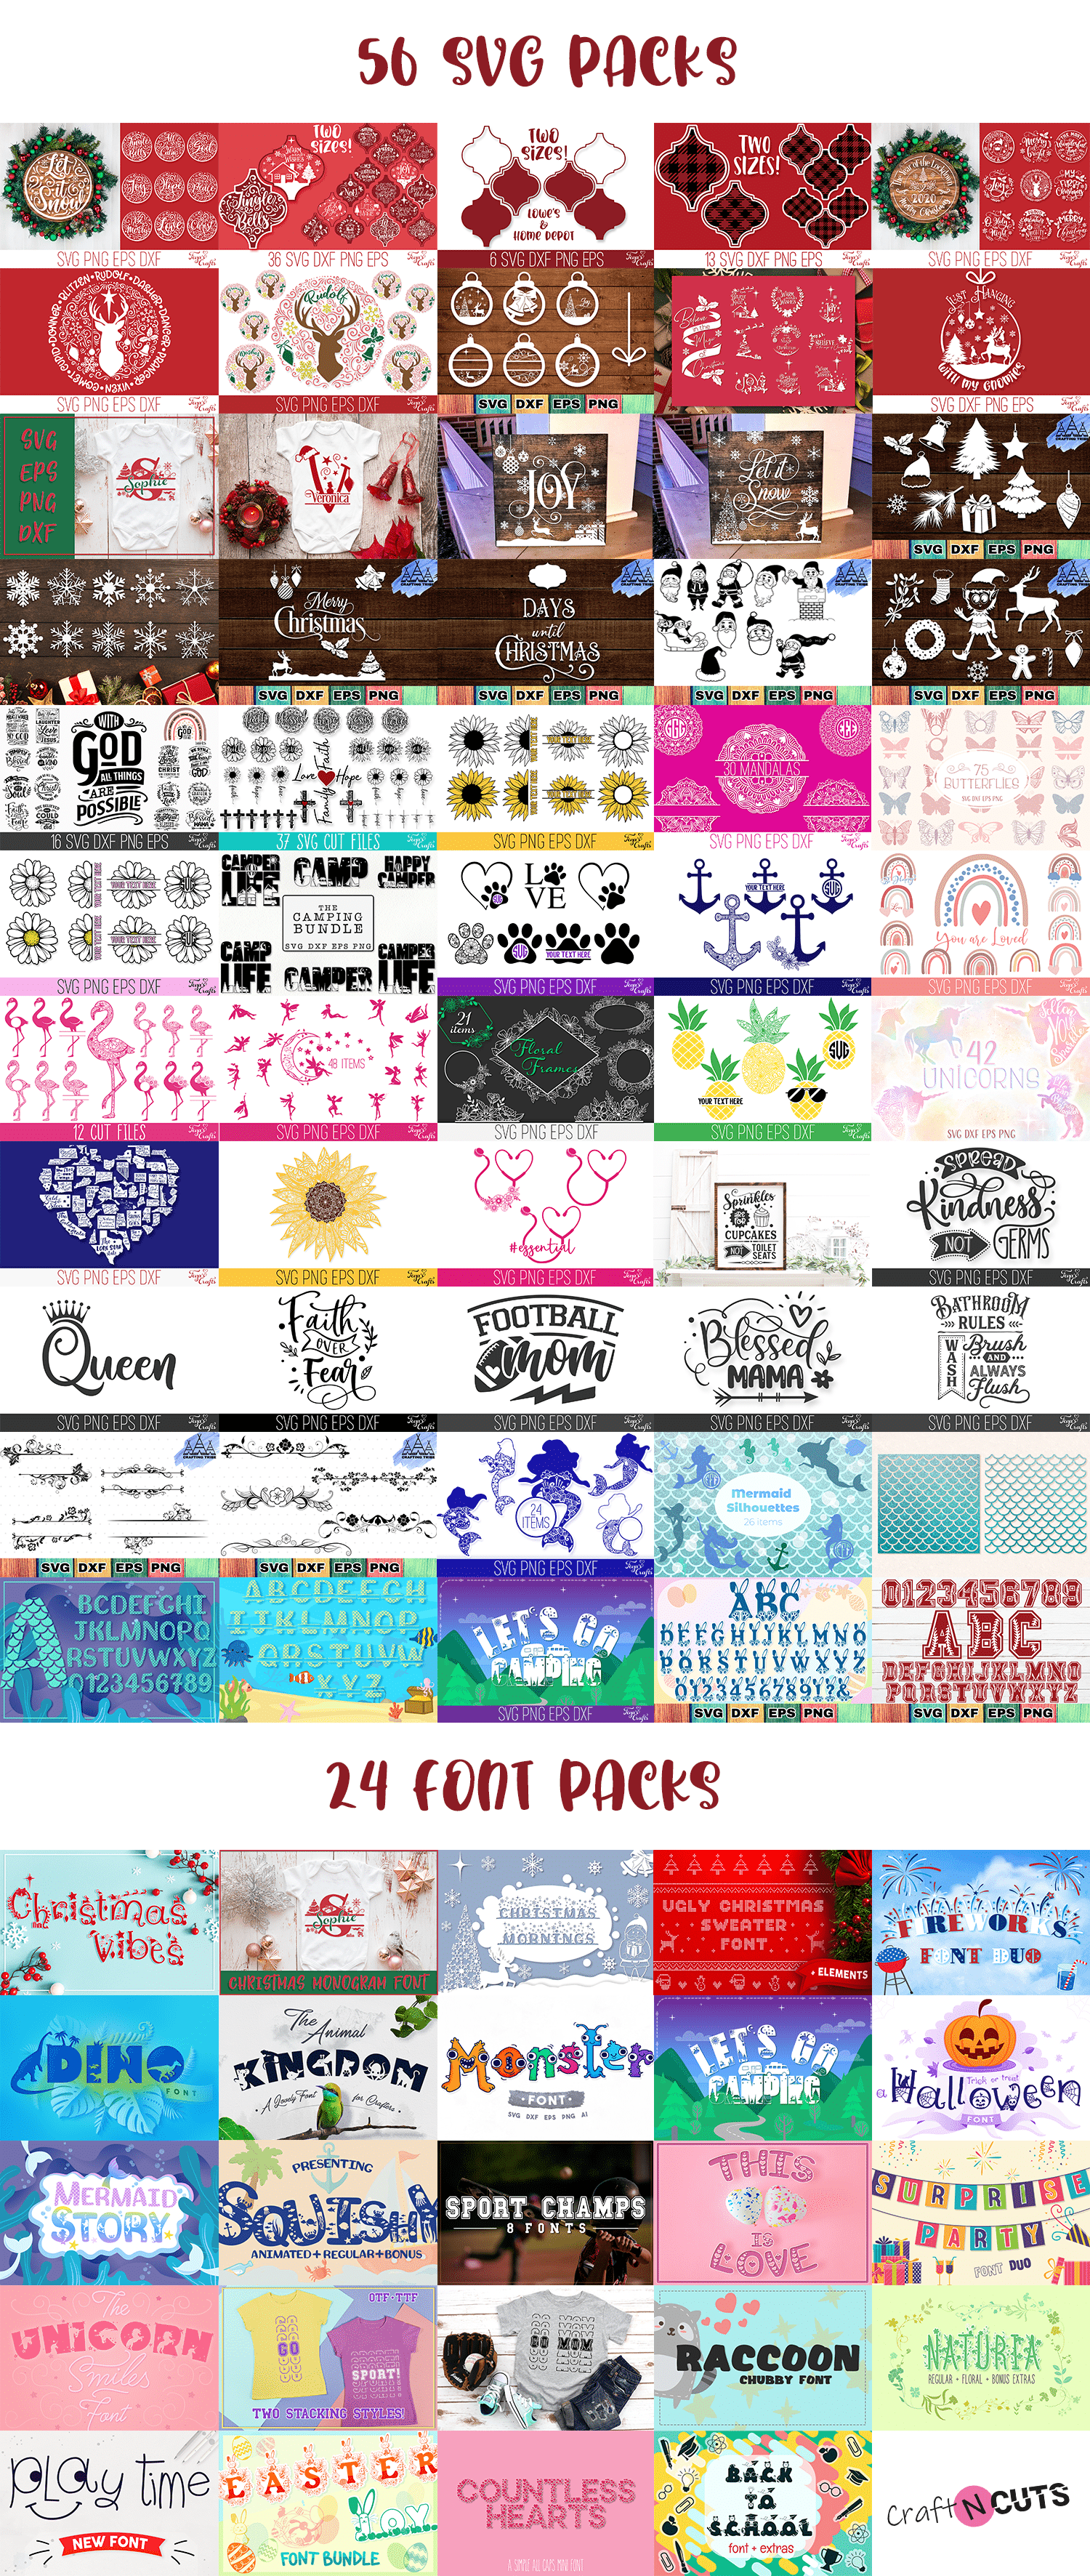 Feya’s All Shop Craft Bundle: 750+ SVG Cut Files & 57 Fonts - Only $19! 1